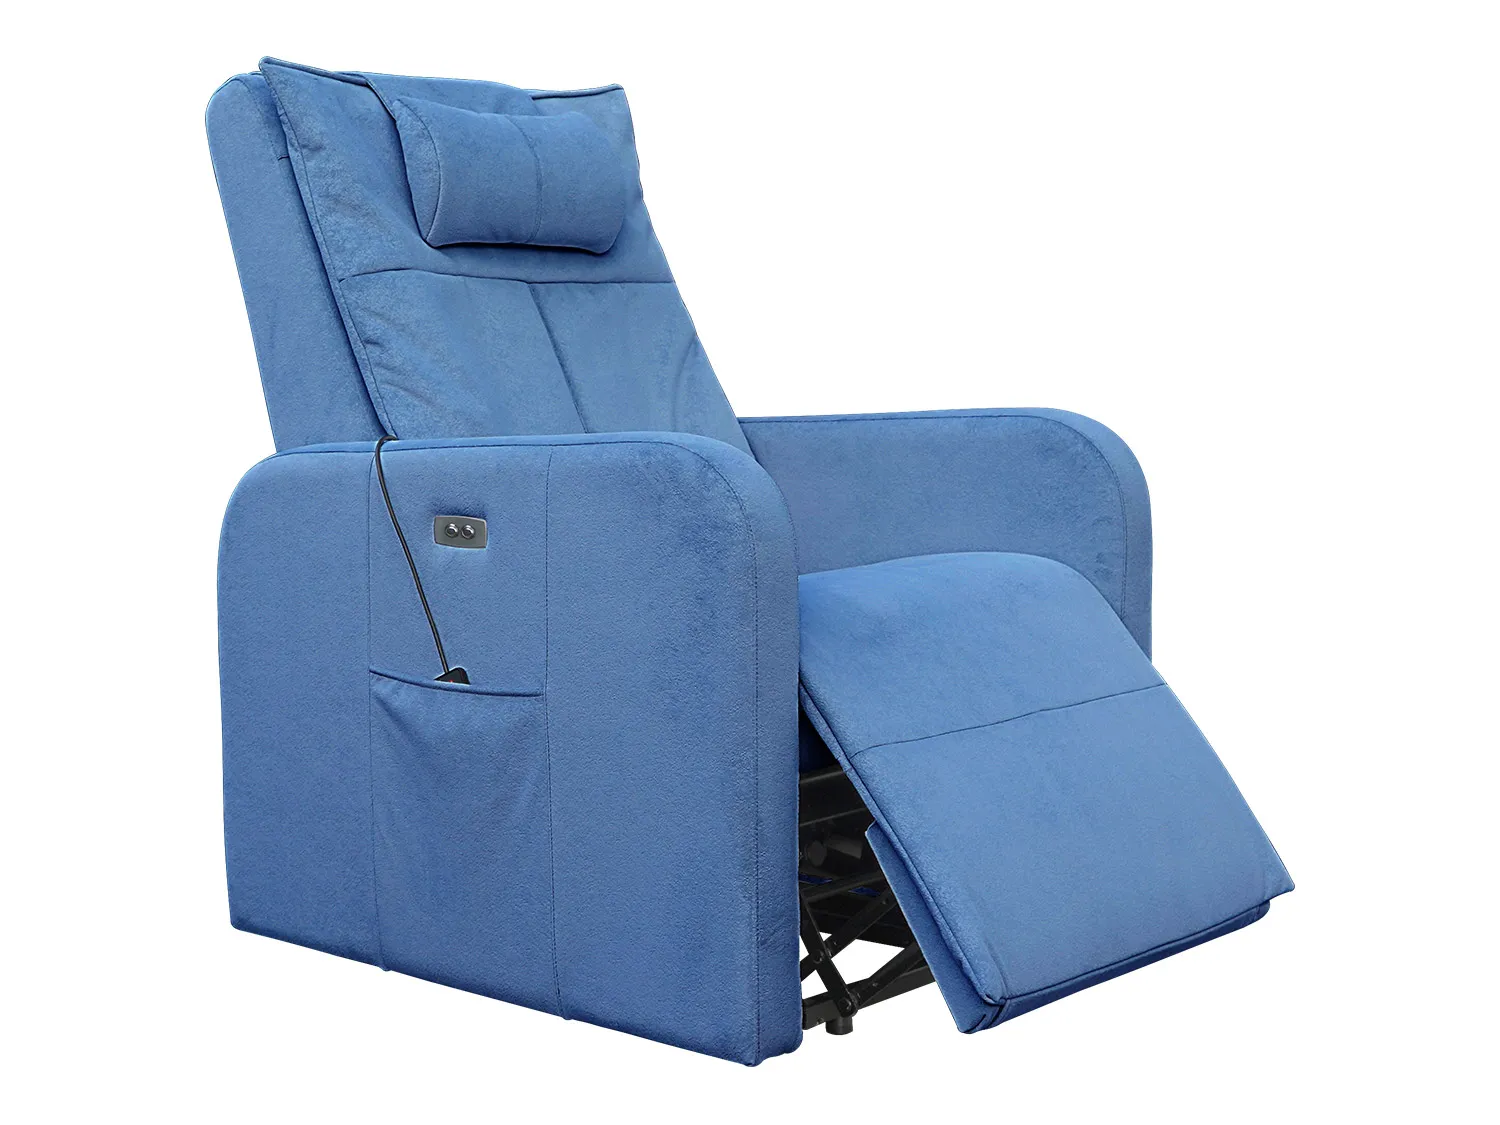 Массажное кресло реклайнер с подъемом FUJIMO LIFT CHAIR F3005 FLFK цвет на заказ - 2 